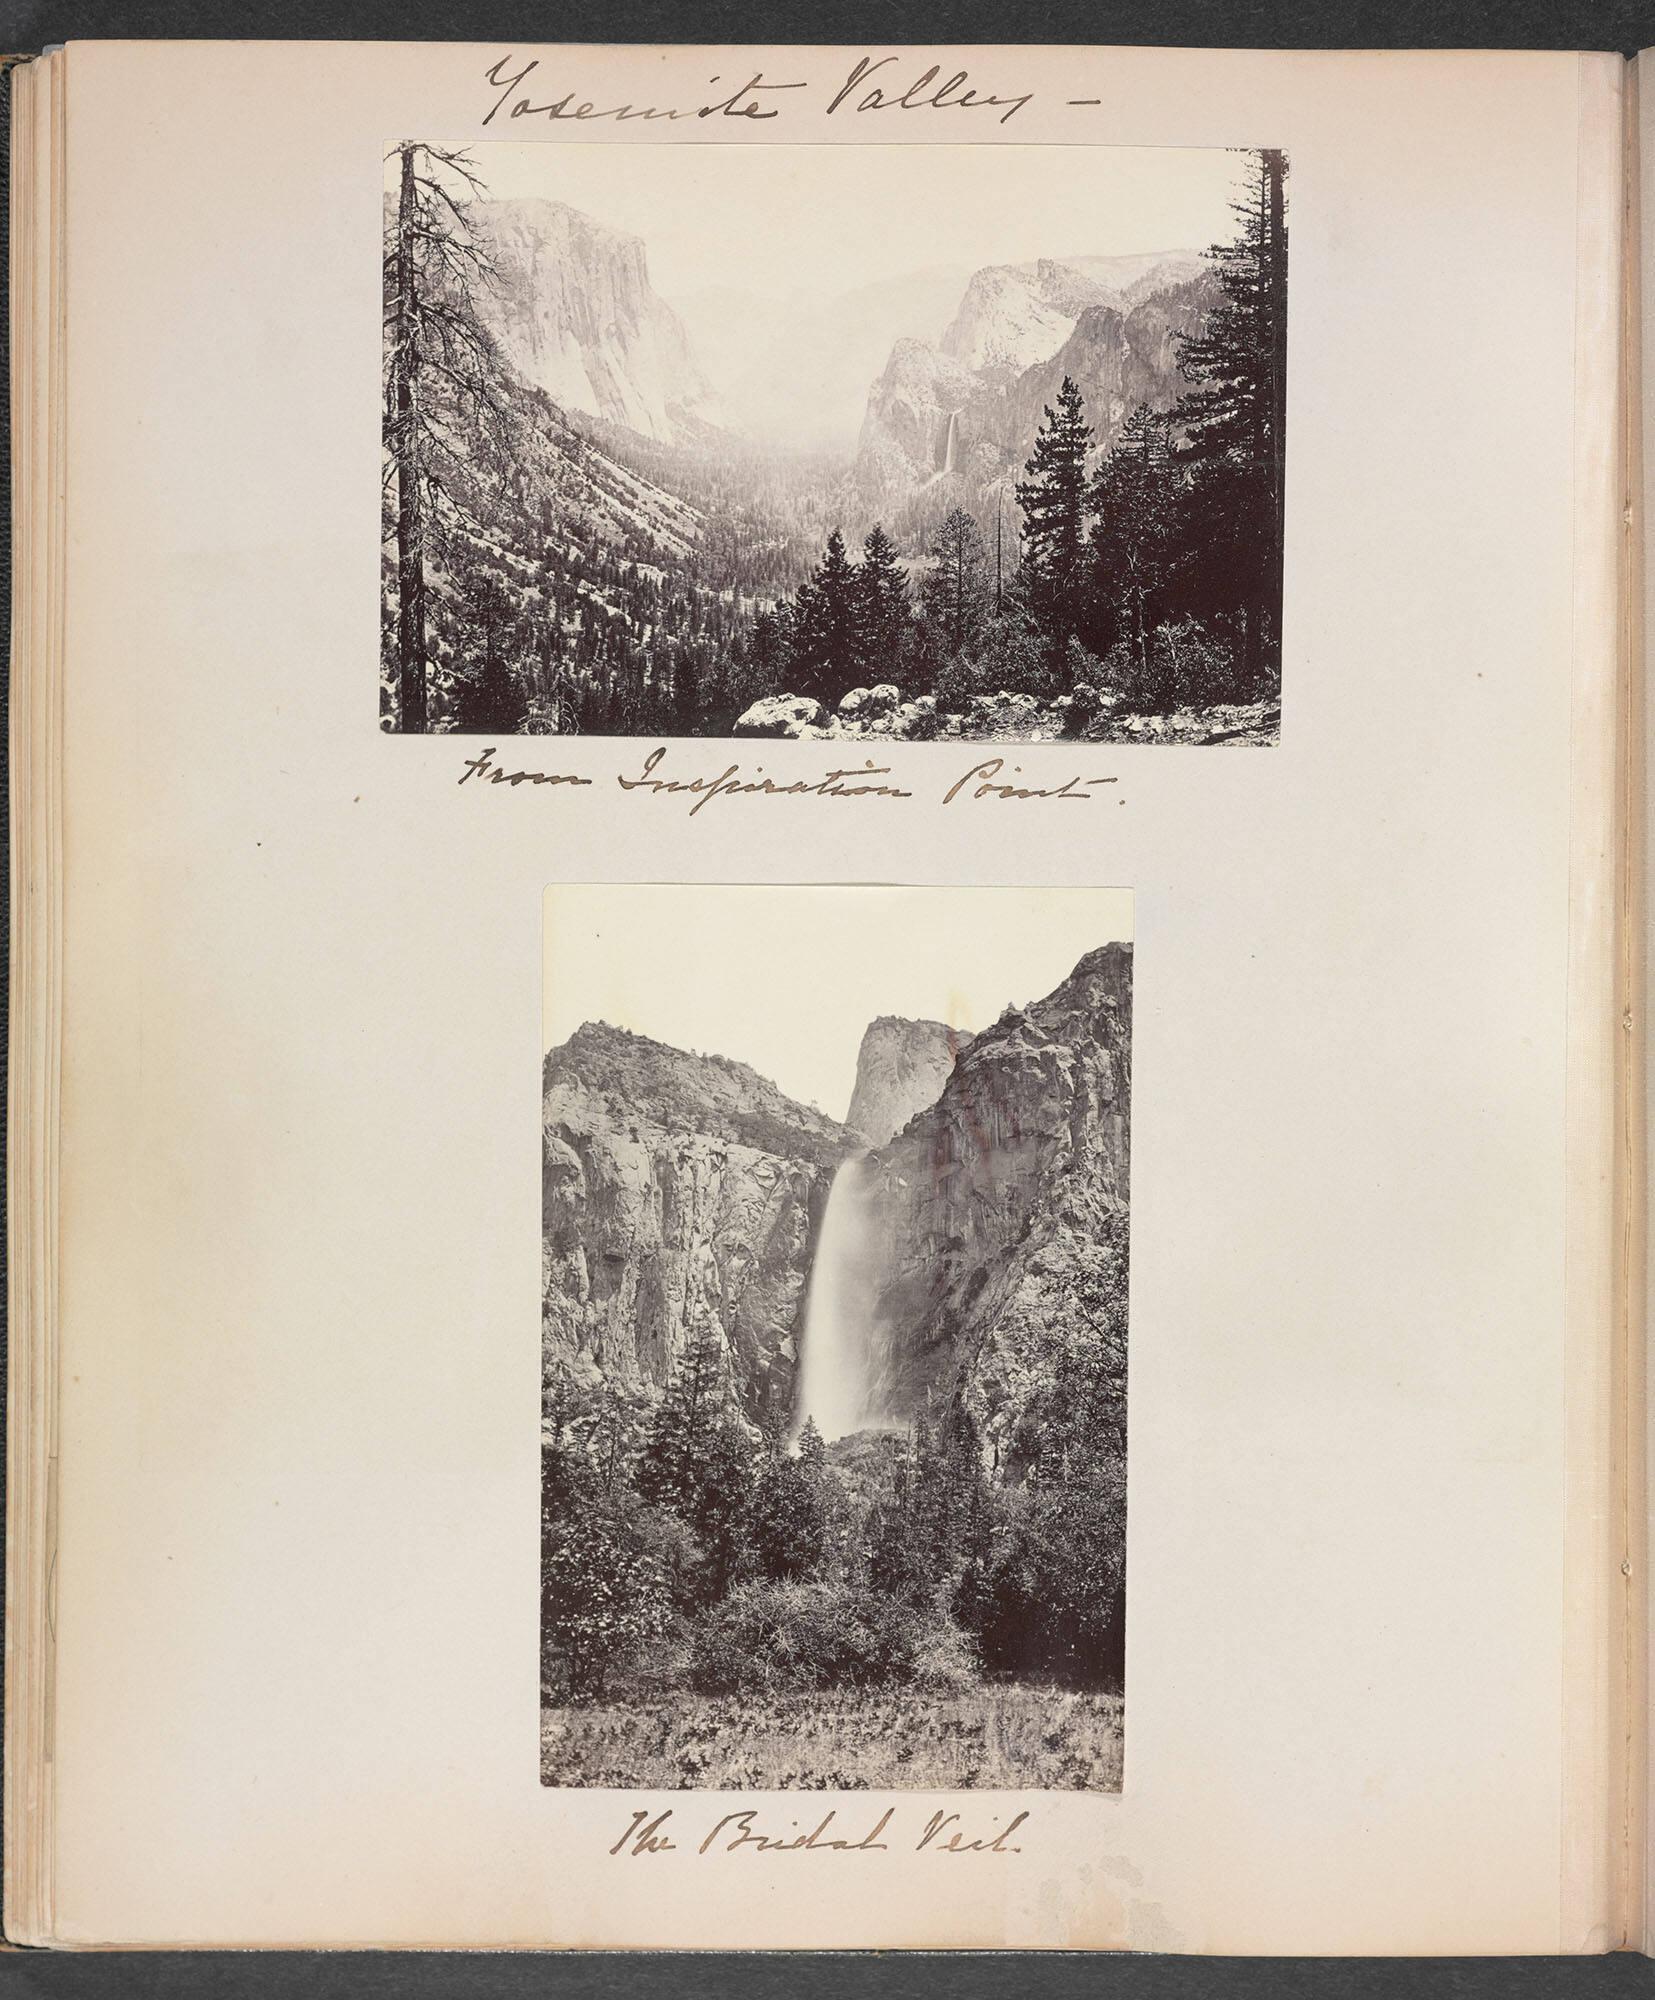 Photo album of Yosemite